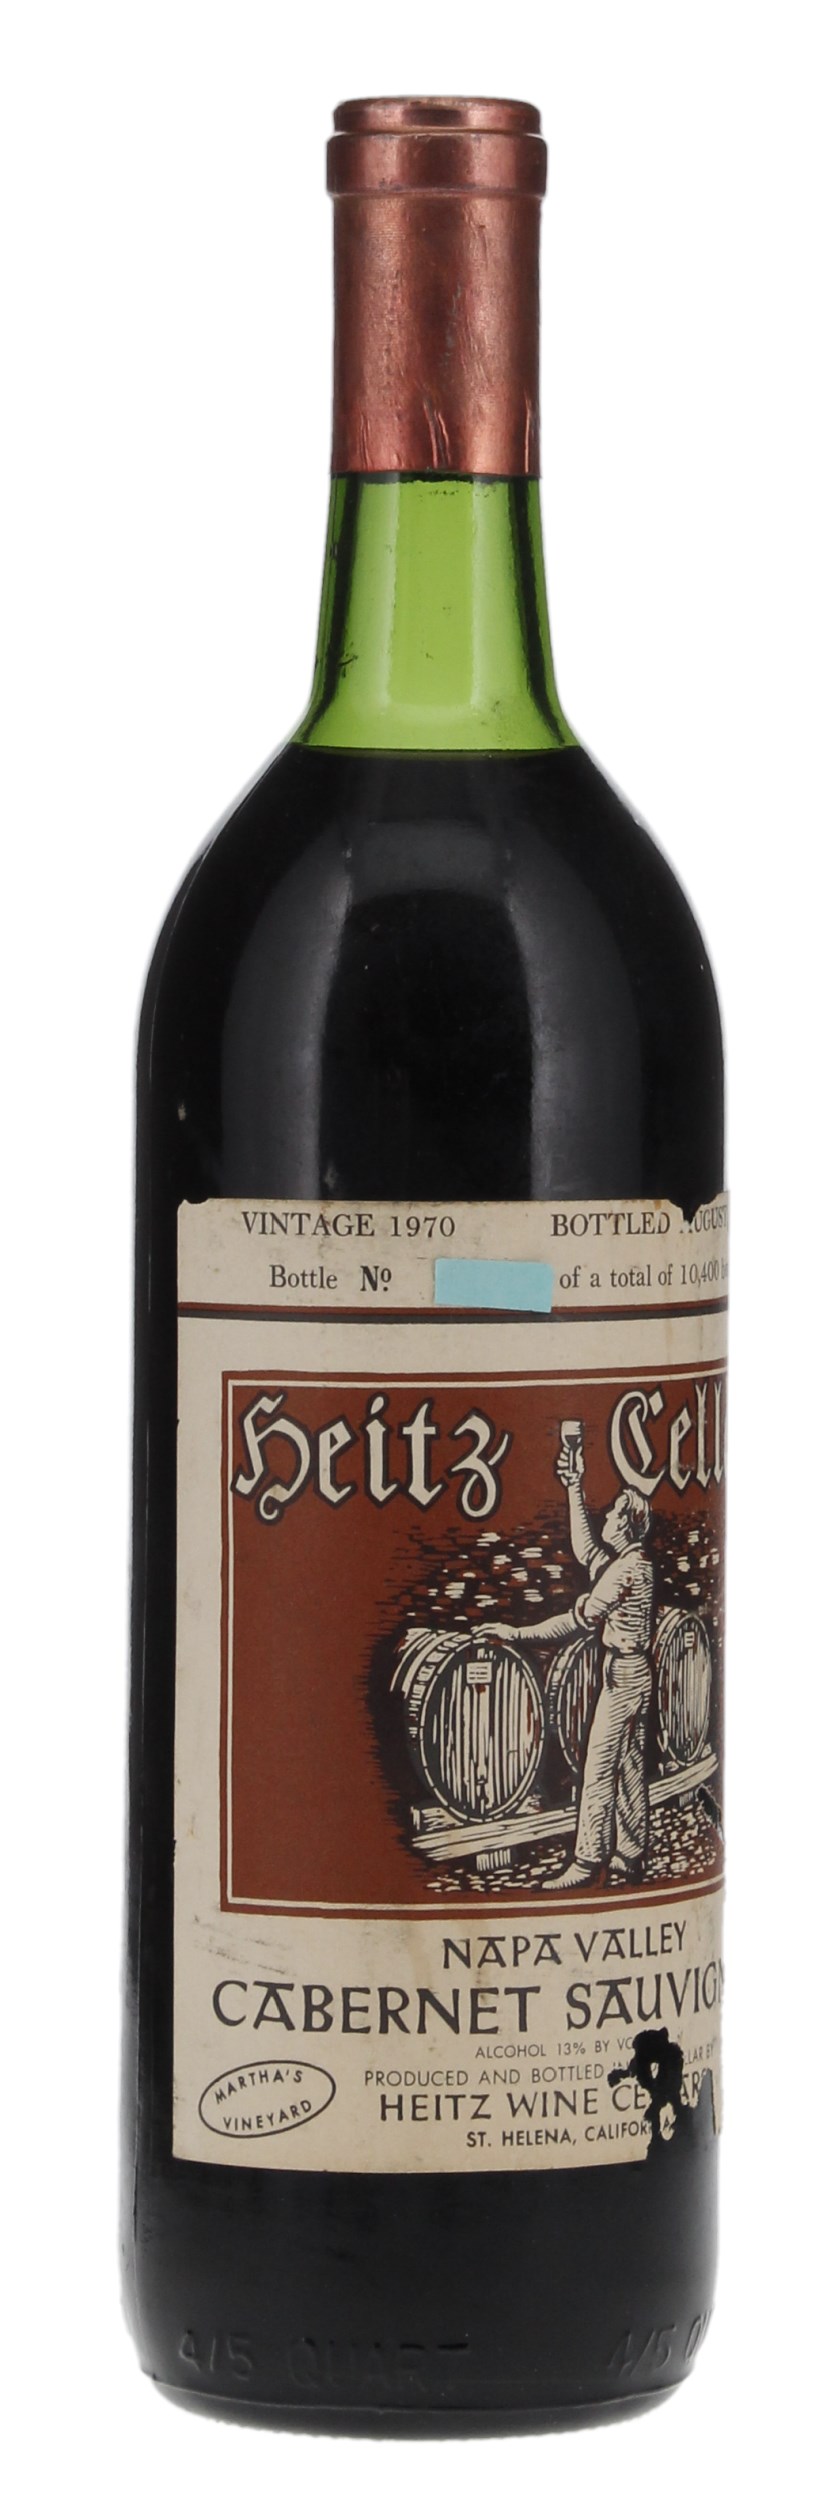 1970 Heitz Martha's Vineyard Cabernet Sauvignon, 750ml